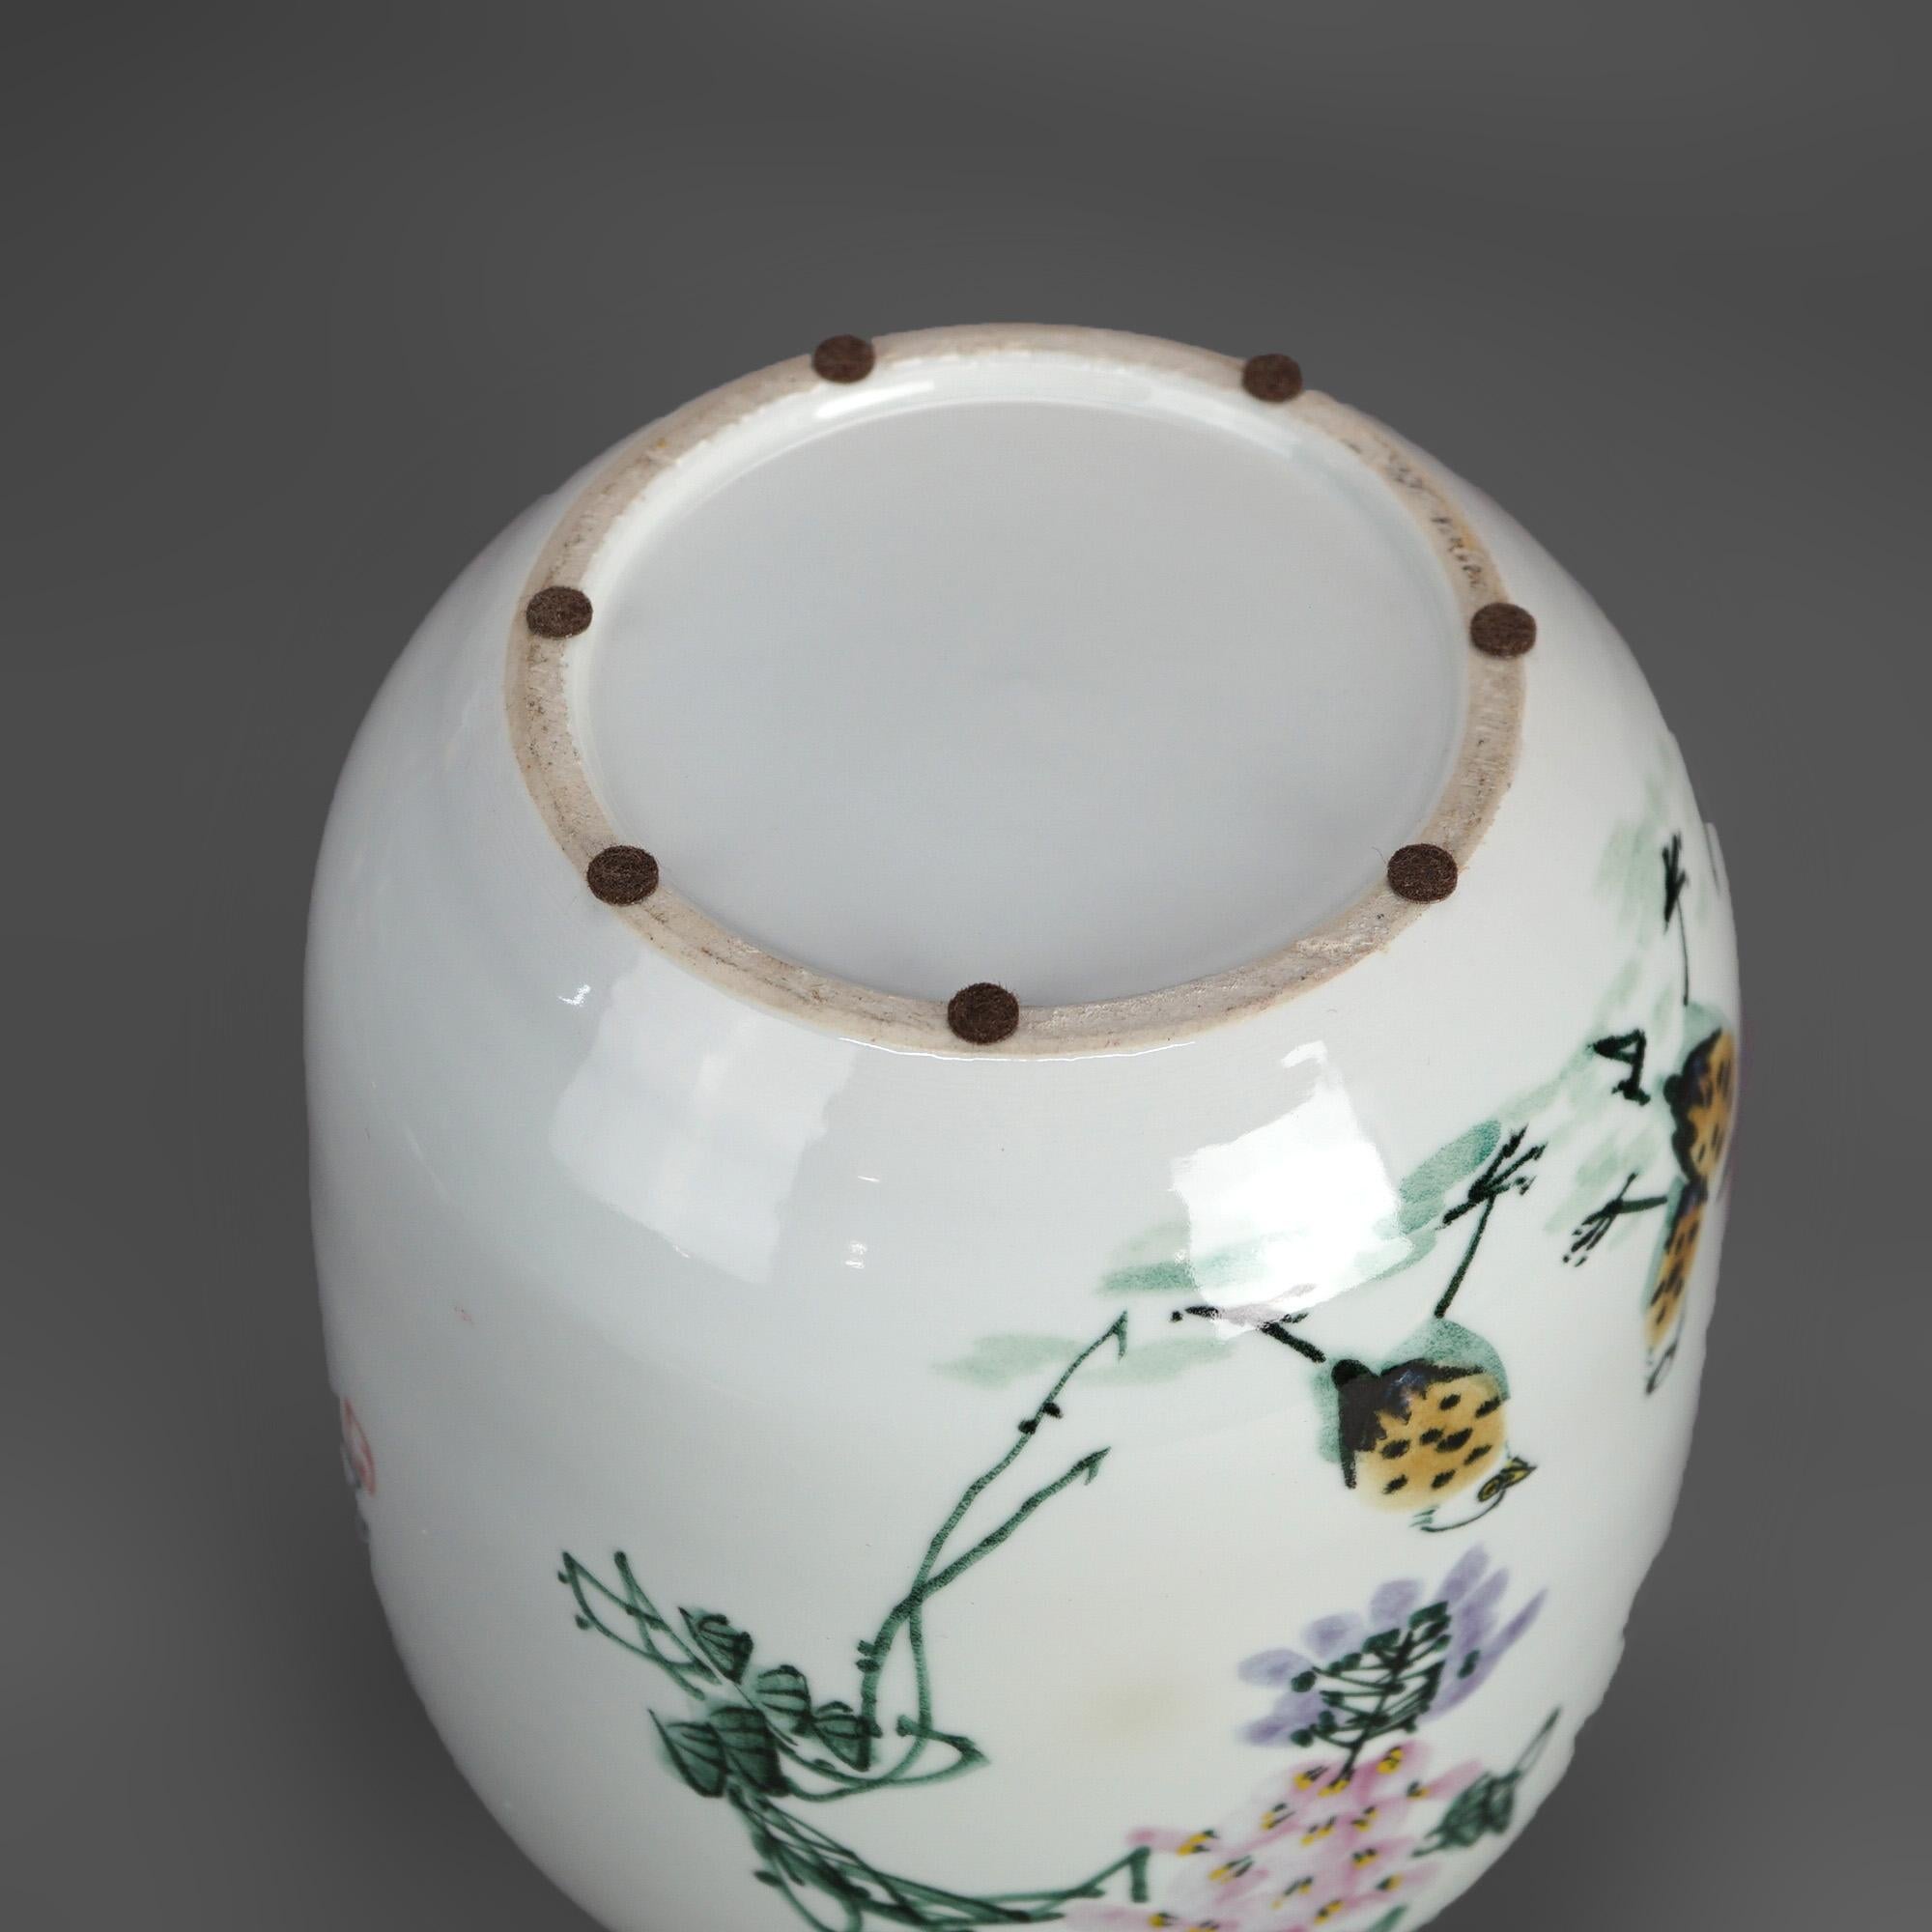 Chinese Jingdezhen Porcelain Jar Vase with Hand Painted Myrtle Design 20thC For Sale 5